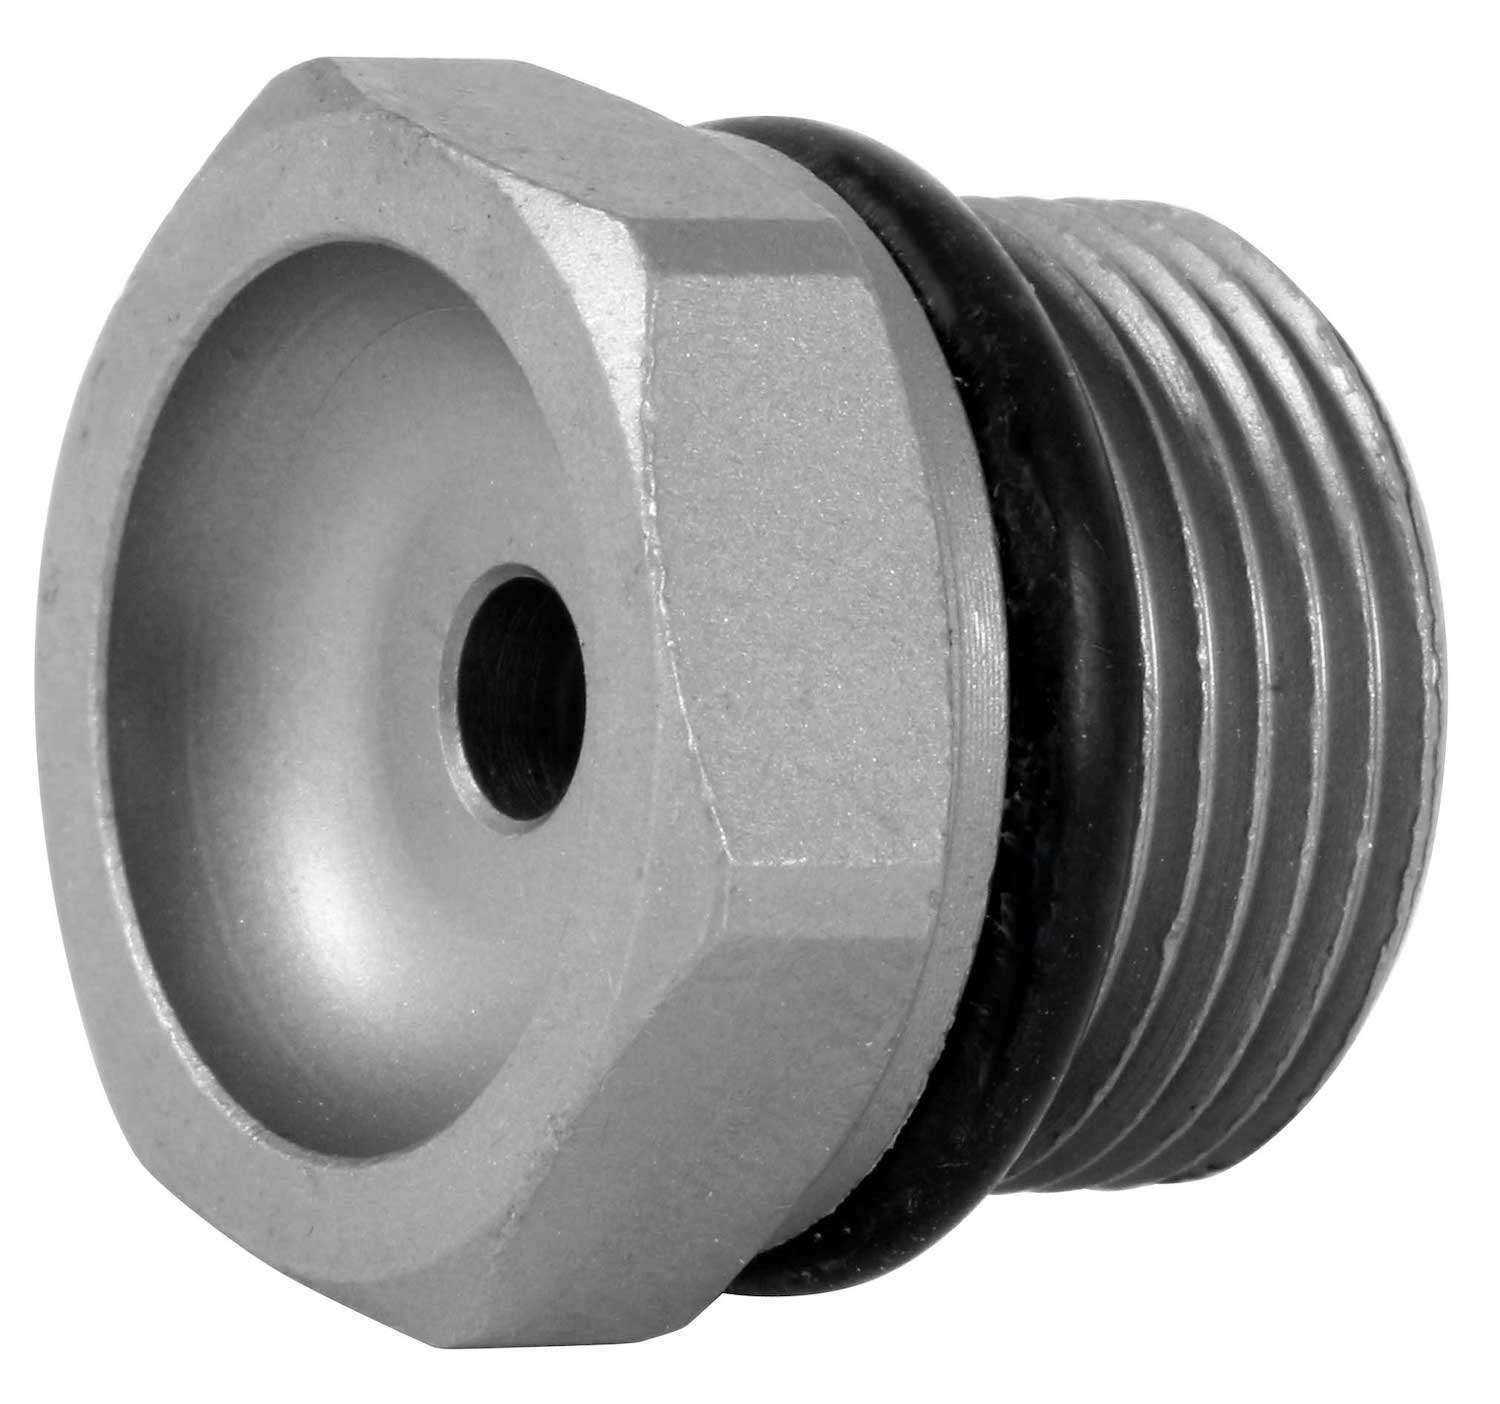 Buse inox pour lance hydro-balayage - calibre 1,8 mm